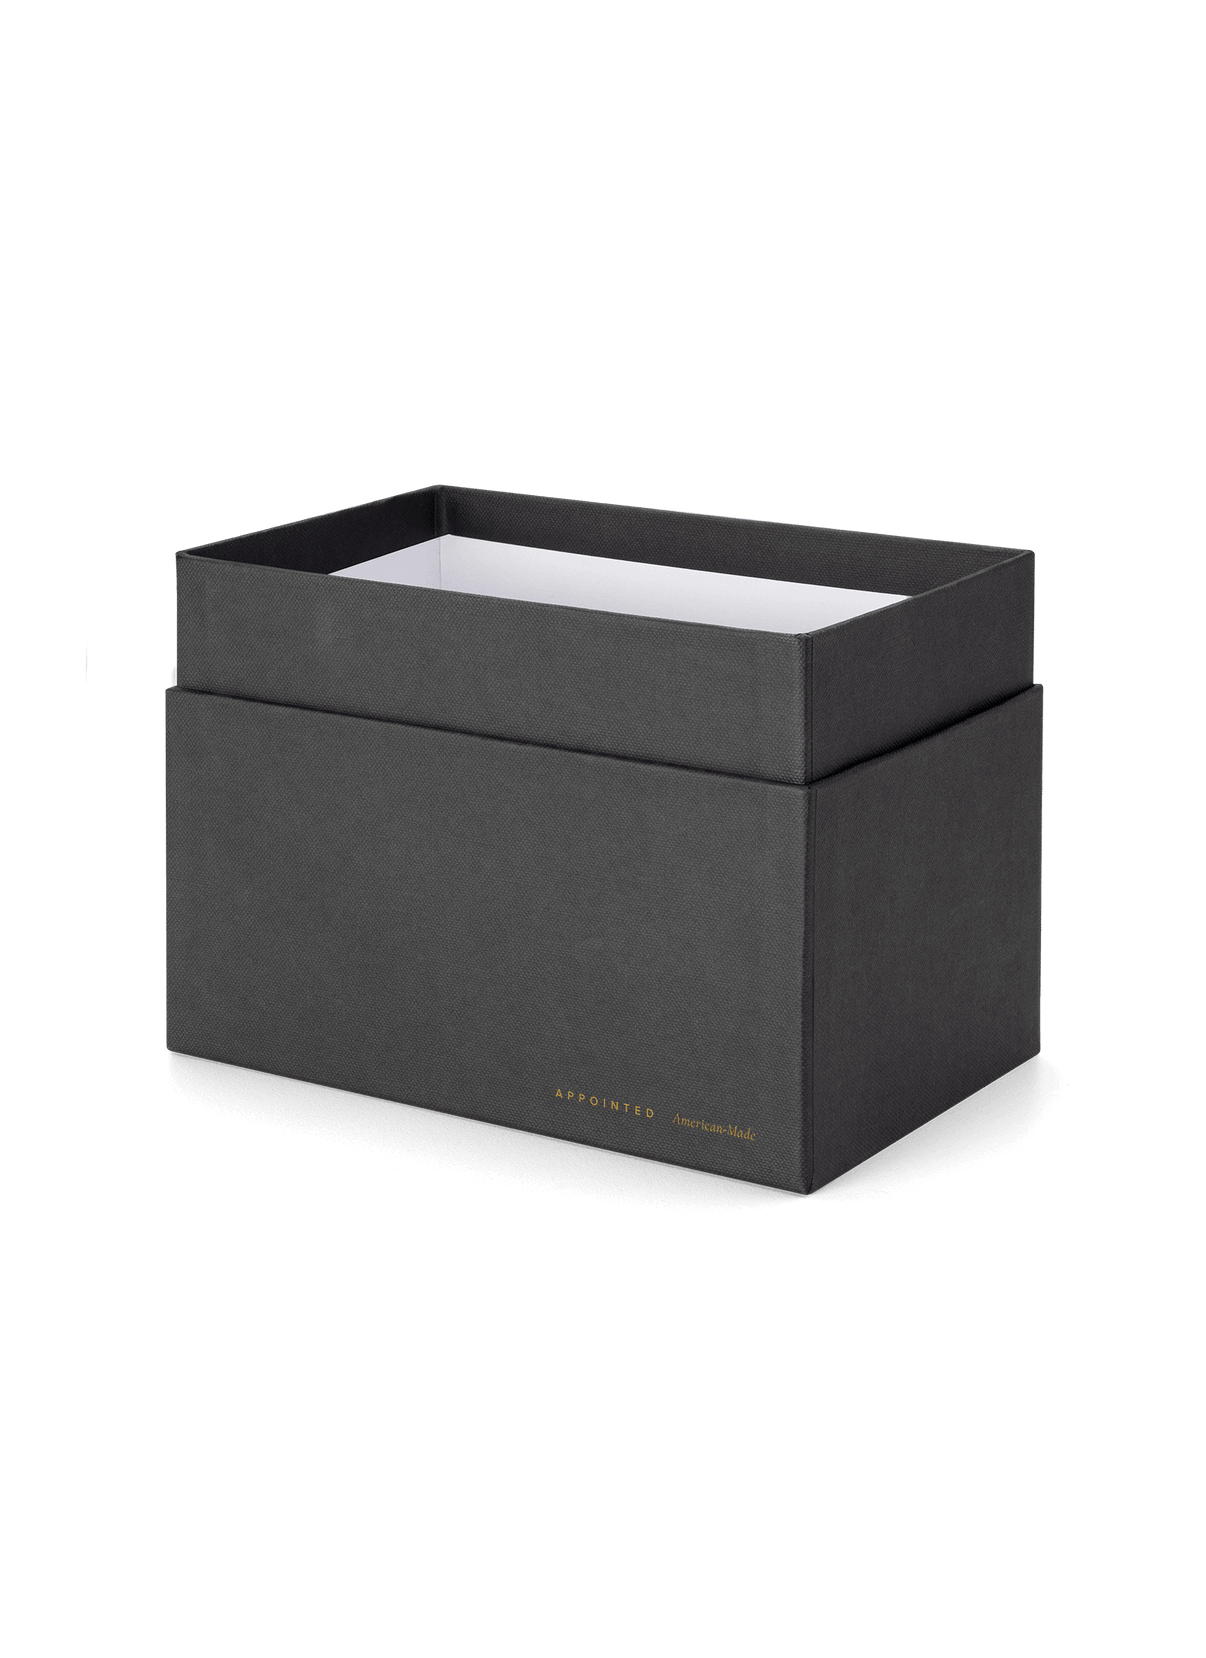 Diagonal view of onyx storage box, lid off|| Onyx